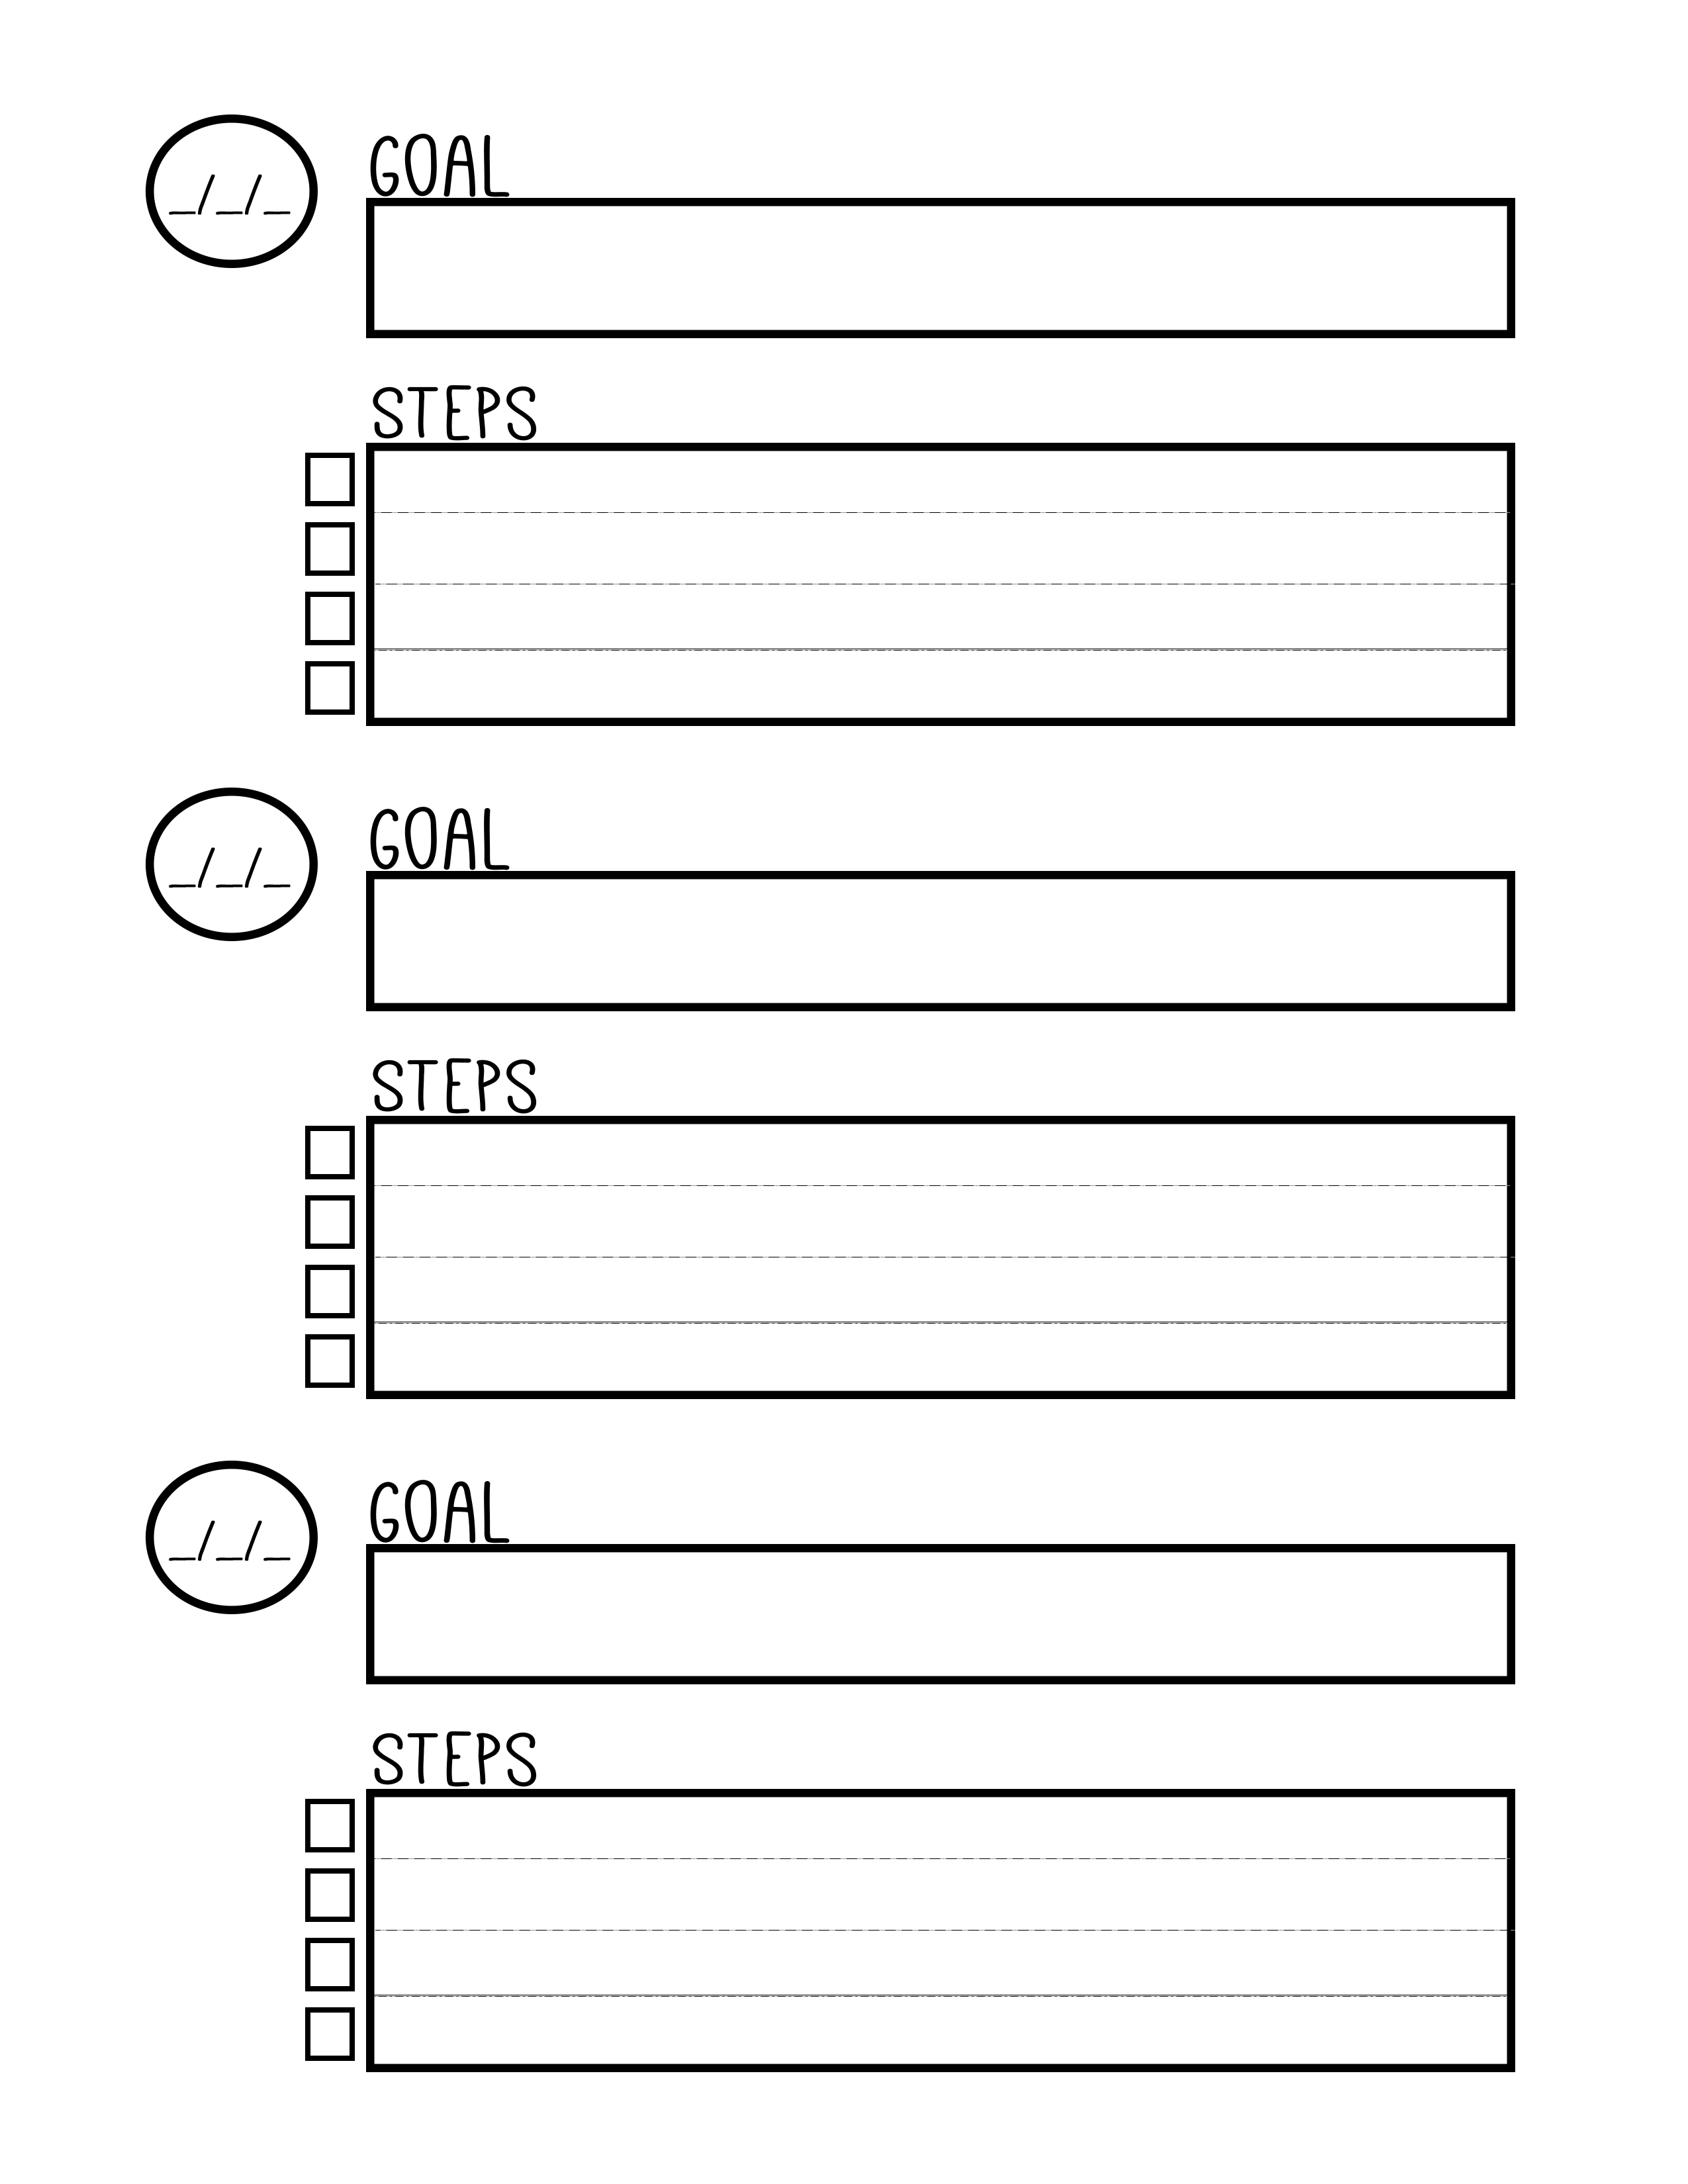 Free Printable Goal Setting Worksheet Image